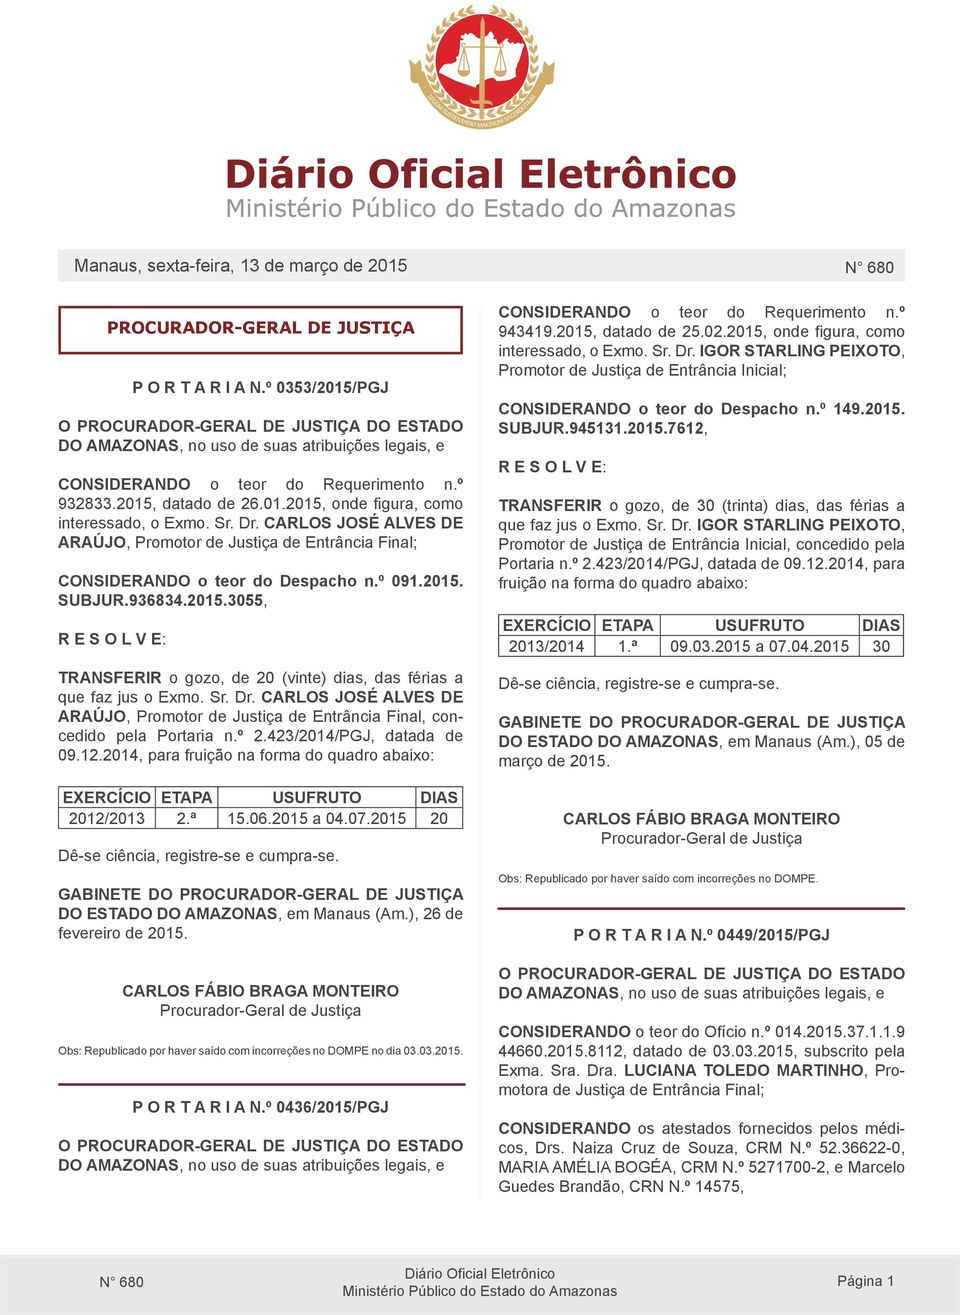 Sr. Dr. CARLOS JOSÉ ALVES DE ARAÚJO, Promotor de Justiça de Entrância Final, concedido pela Portaria n.º 2.423/2014/PGJ, datada de 09.12.